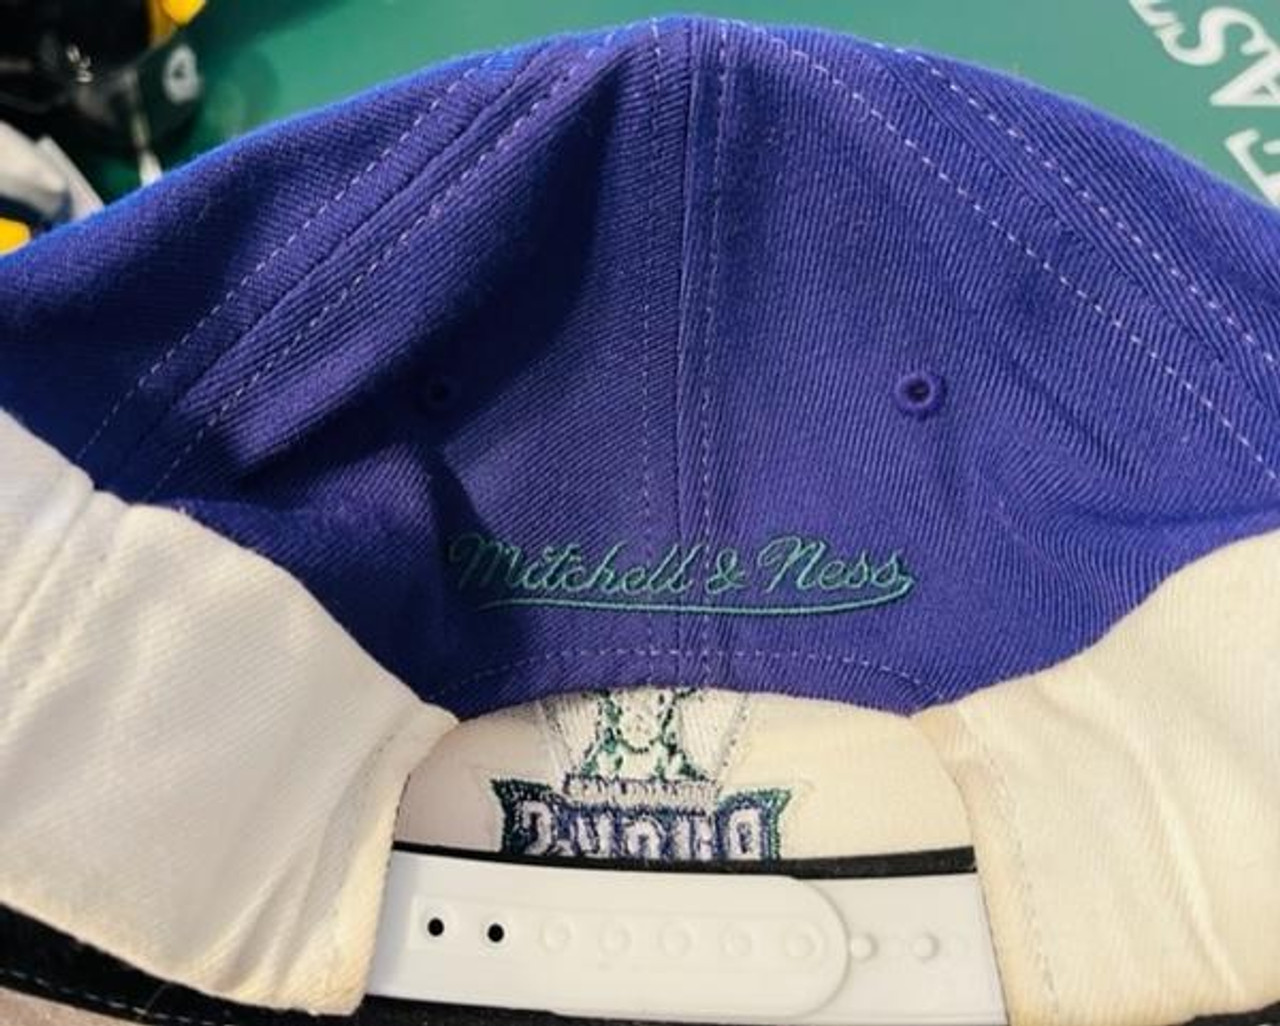 Mitchell & Ness Milwaukee Bucks Hat, Cap Snapback 21229391 Purple (One Size)